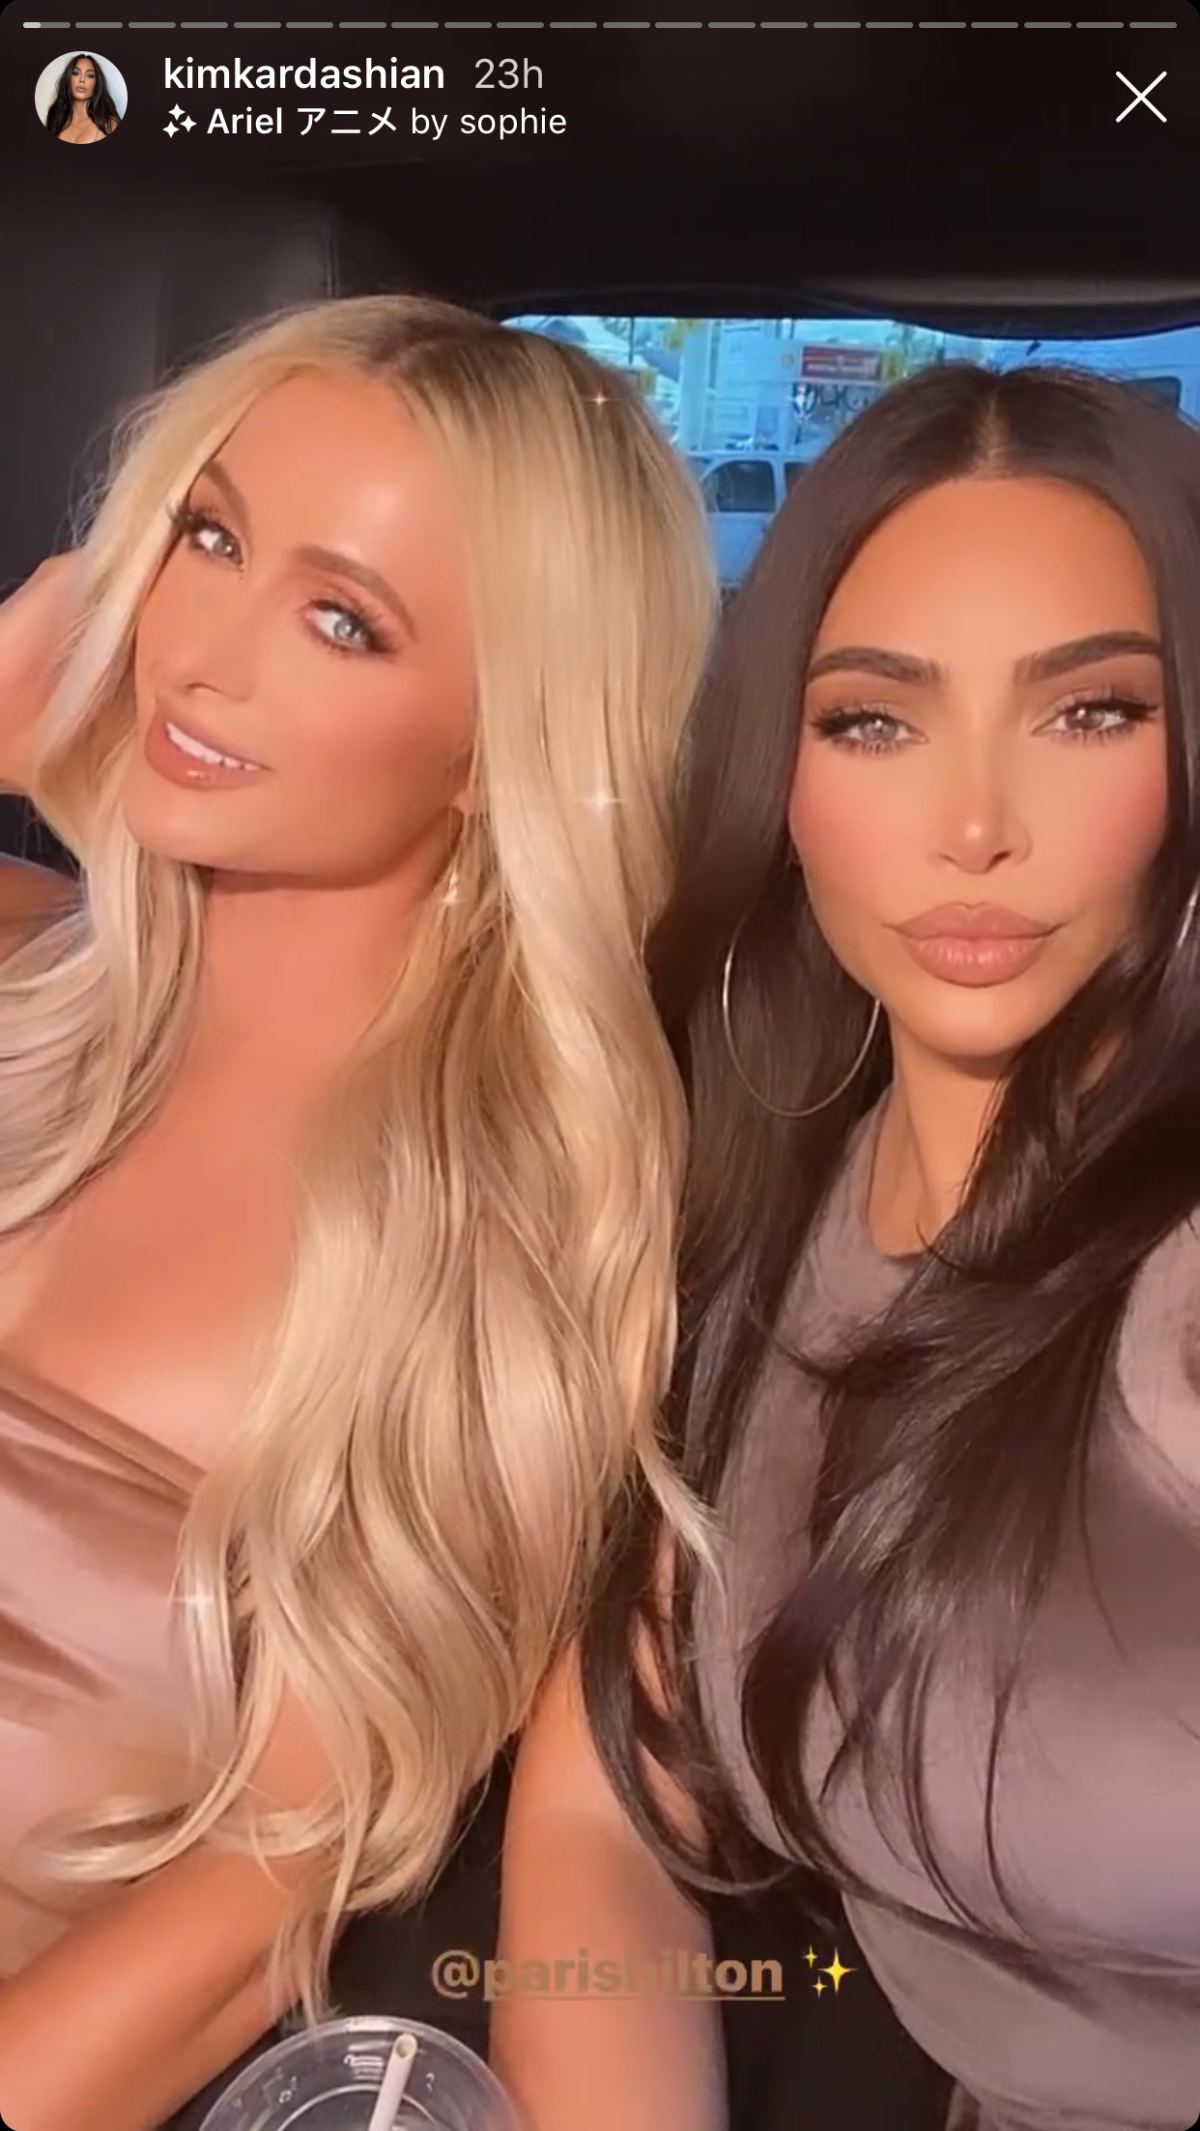 A Complete Timeline Of Paris Hilton And Kim Kardashian's Friendship 